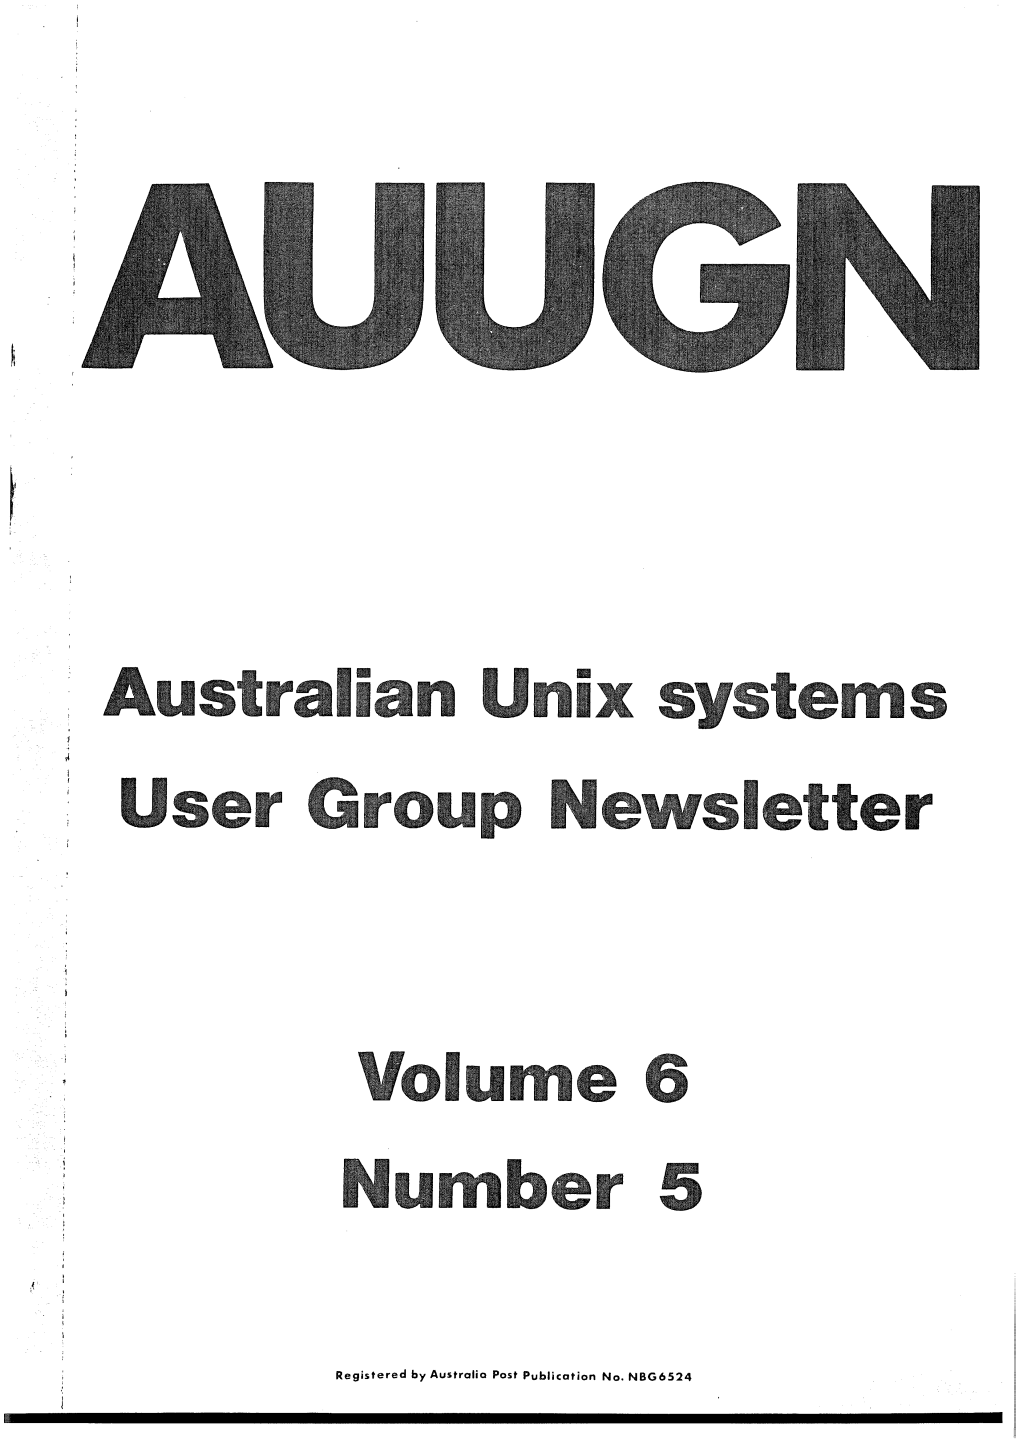 Registered by Australia Post Publication No. NBG6524